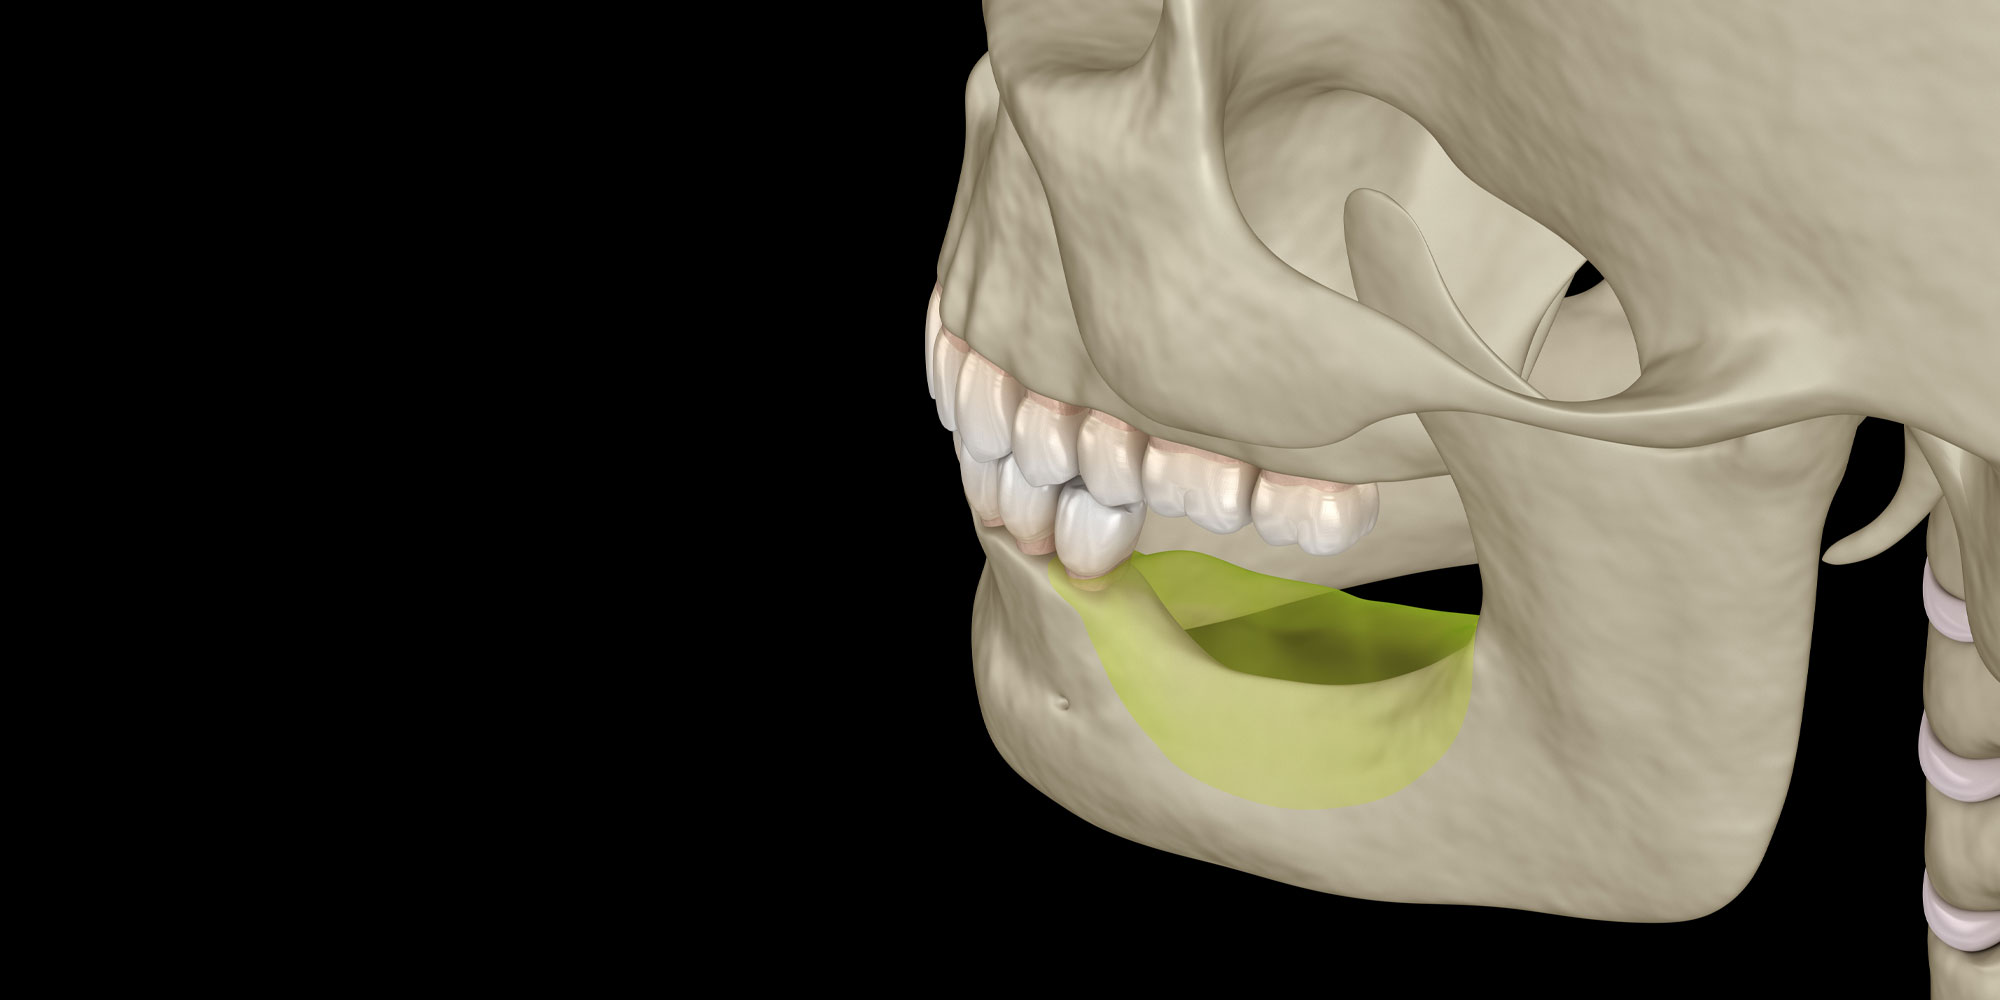 image graphic of bone graft